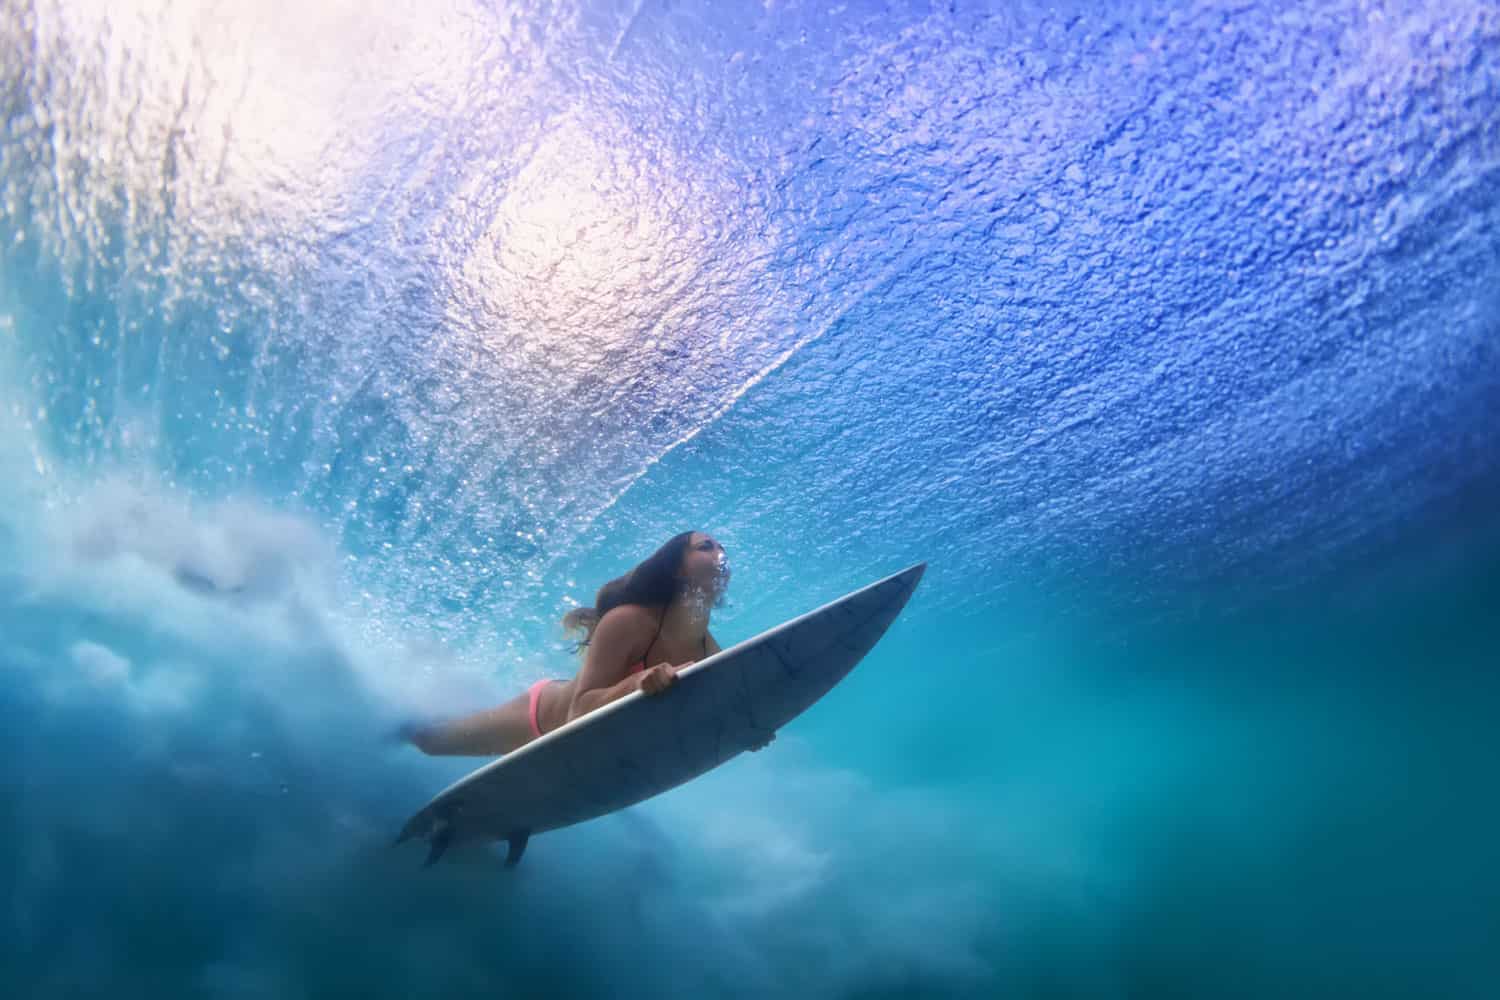 Surfer with surf board dive underwater under breaking ocean wave